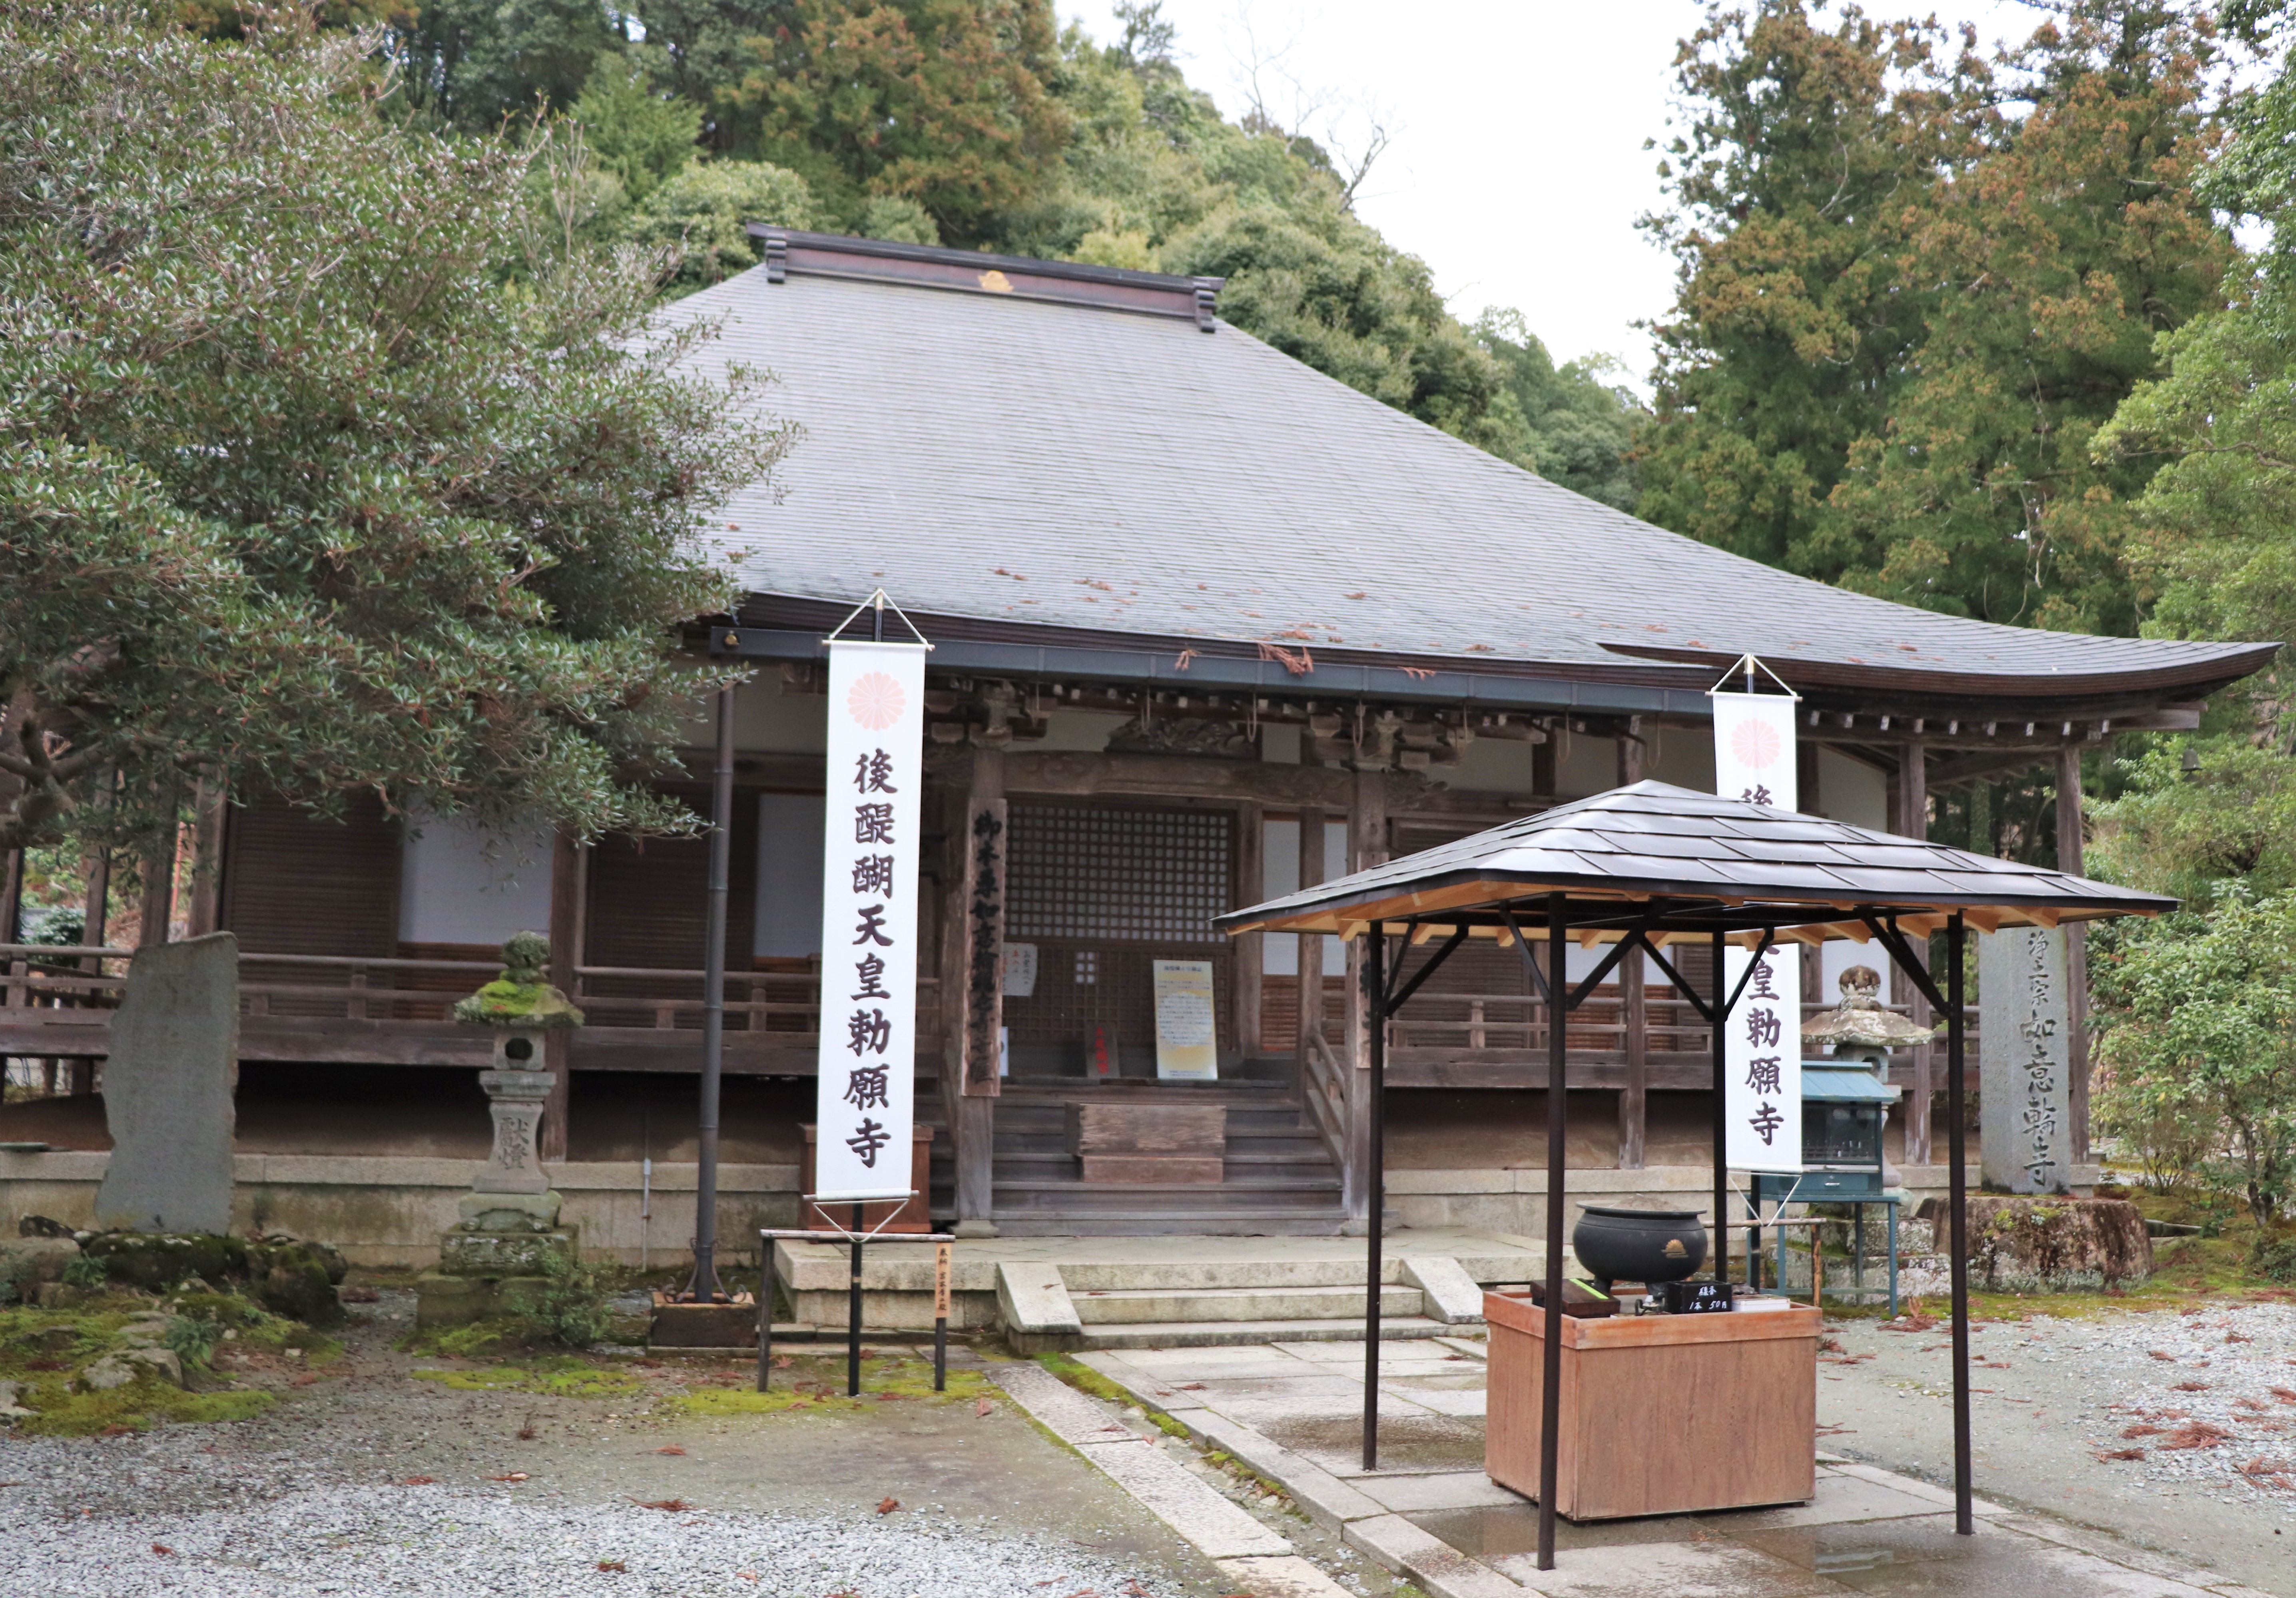 main temple building of Nyorin temple in yoshino Japan